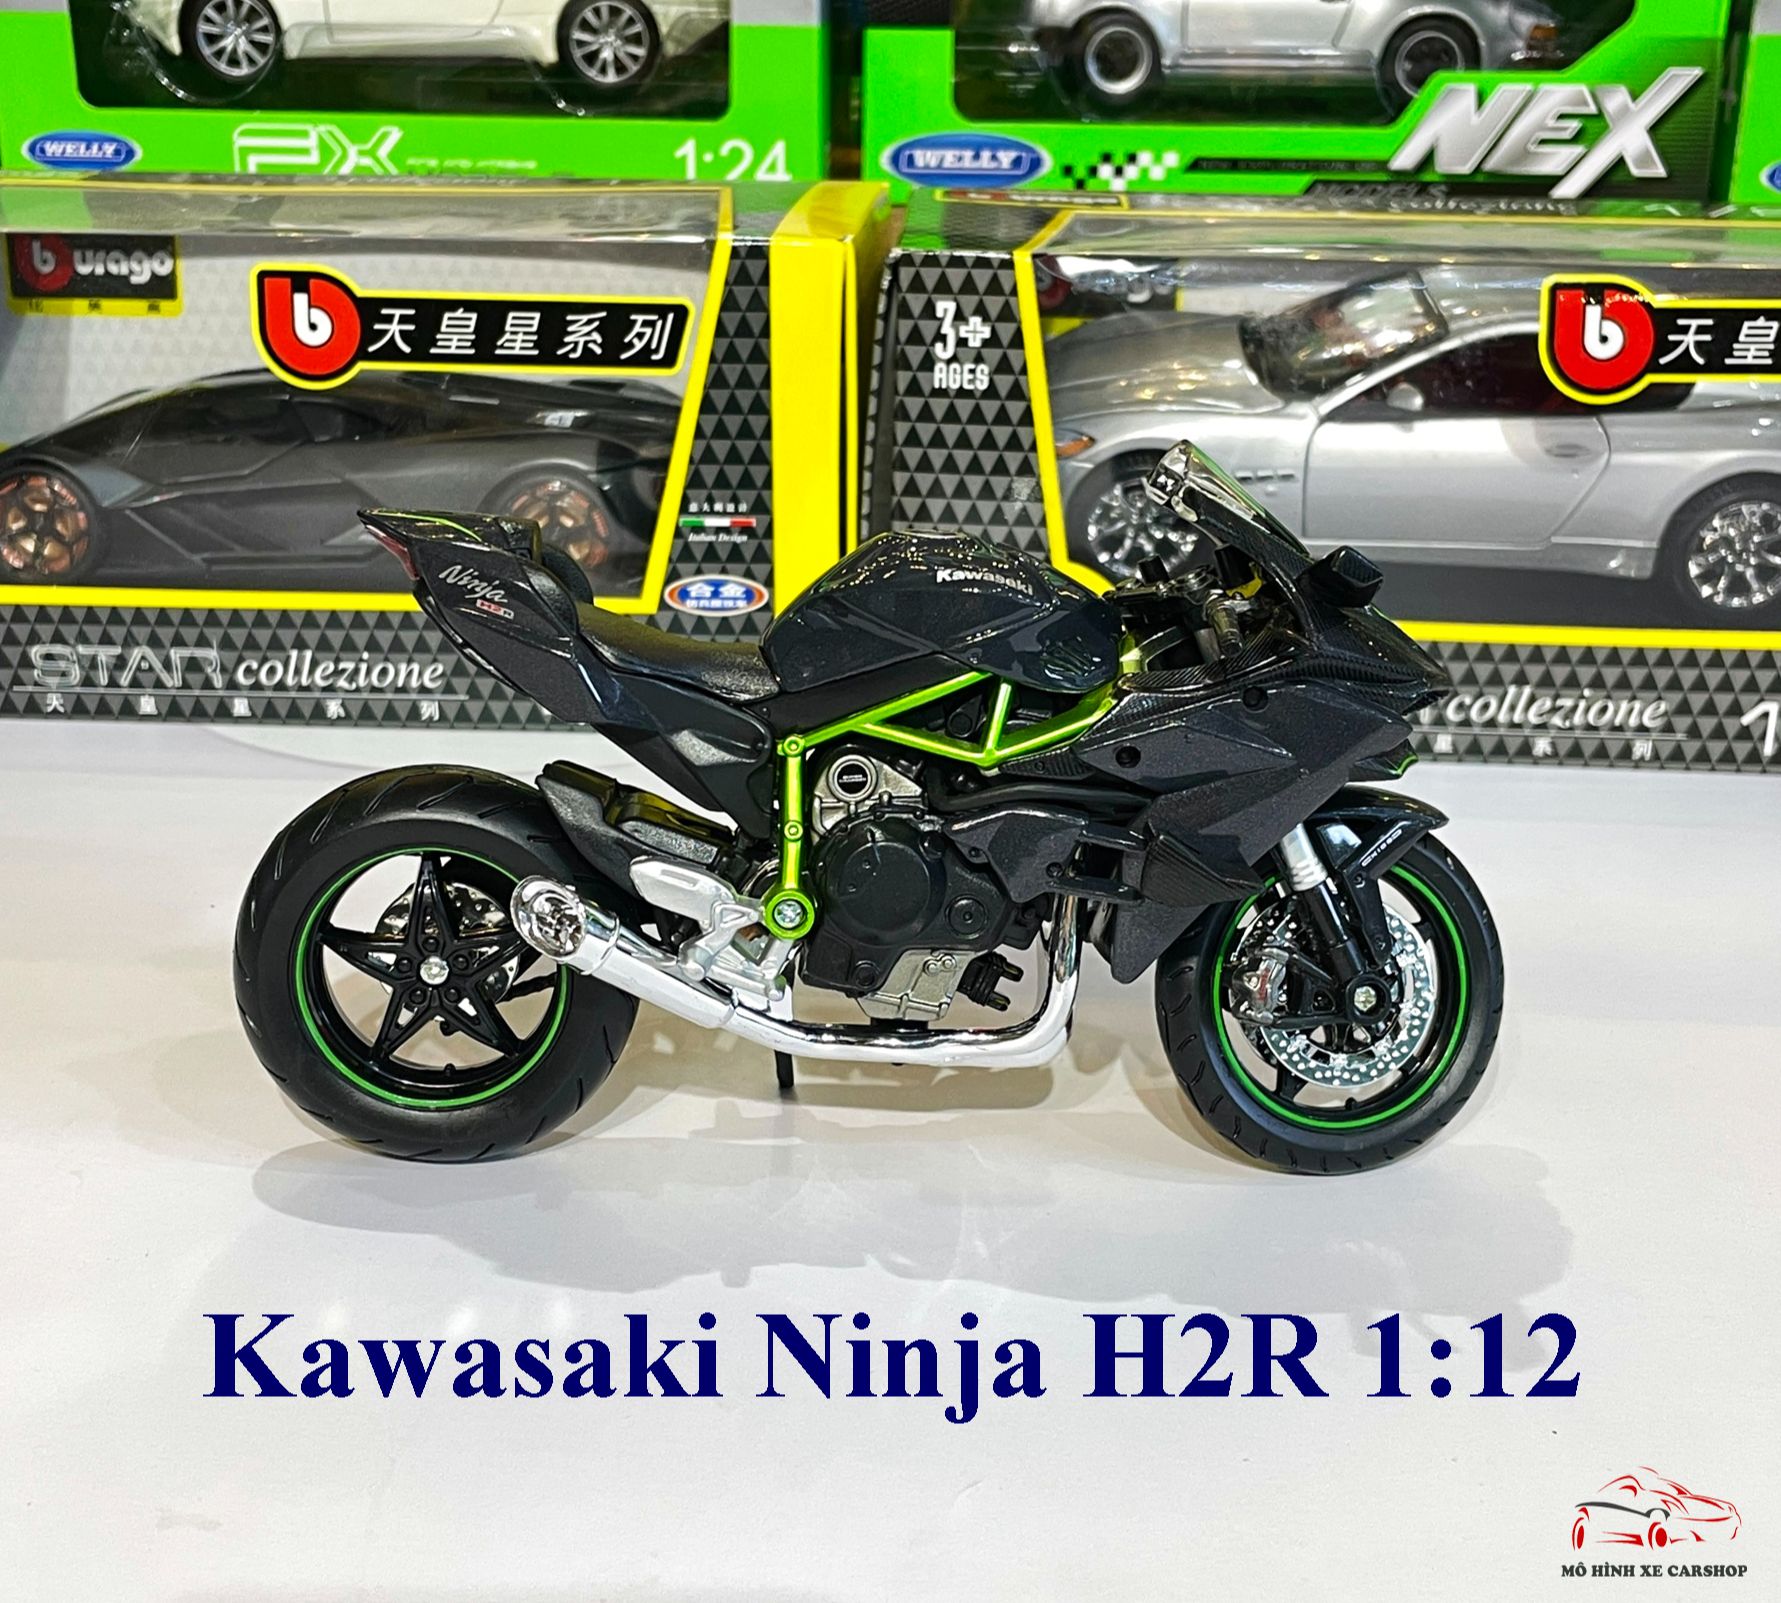 Kawasaki H2r Maisto 112 Đen  Shop Xe Mô Hình Tĩnh